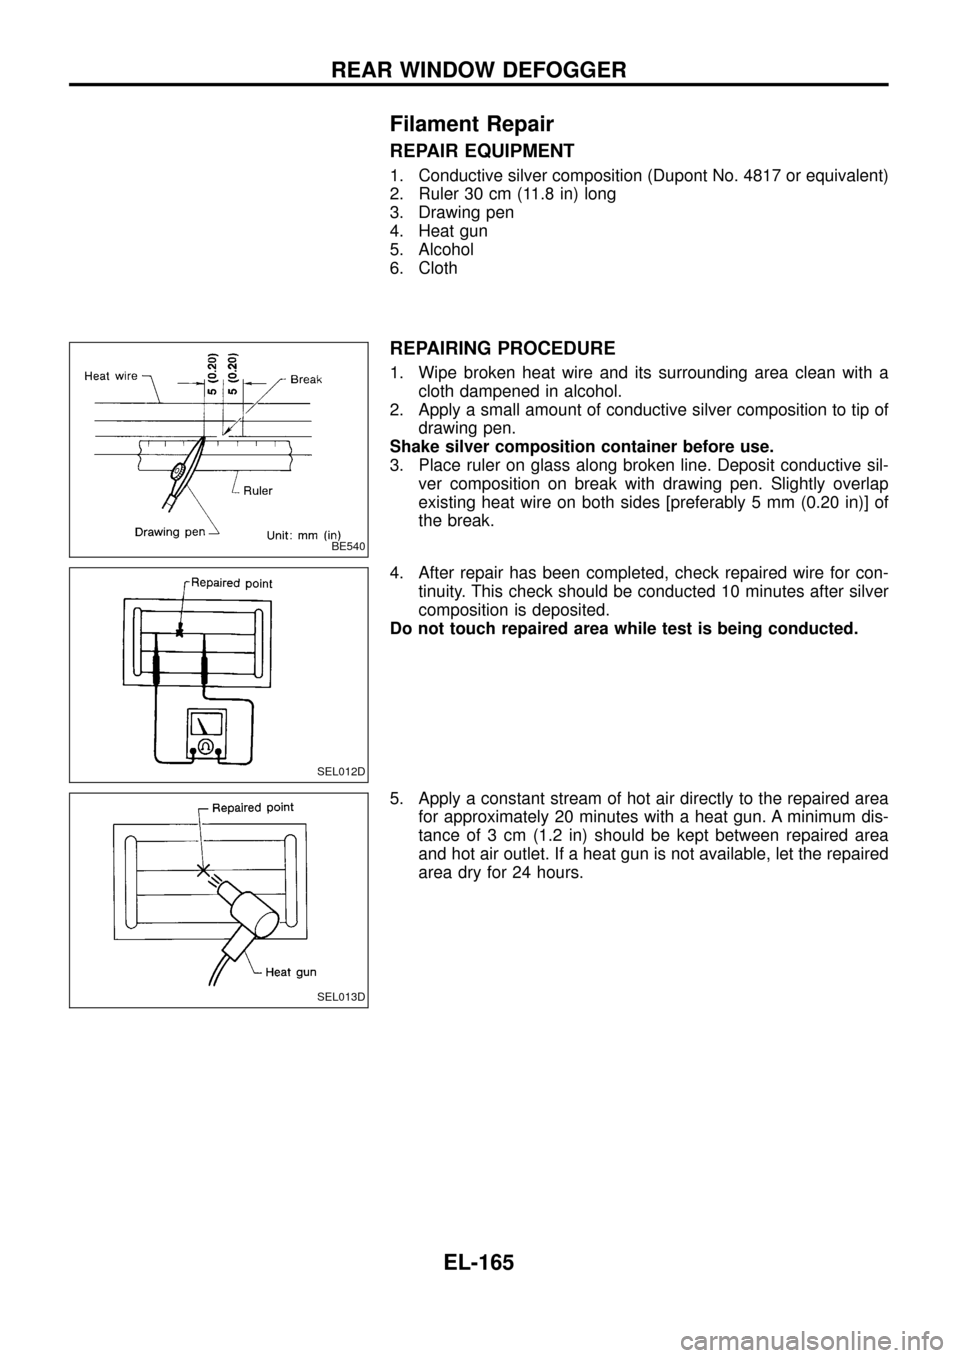 NISSAN PATROL 1998 Y61 / 5.G Electrical System Workshop Manual Filament Repair
REPAIR EQUIPMENT
1. Conductive silver composition (Dupont No. 4817 or equivalent)
2. Ruler 30 cm (11.8 in) long
3. Drawing pen
4. Heat gun
5. Alcohol
6. Cloth
REPAIRING PROCEDURE
1. Wi